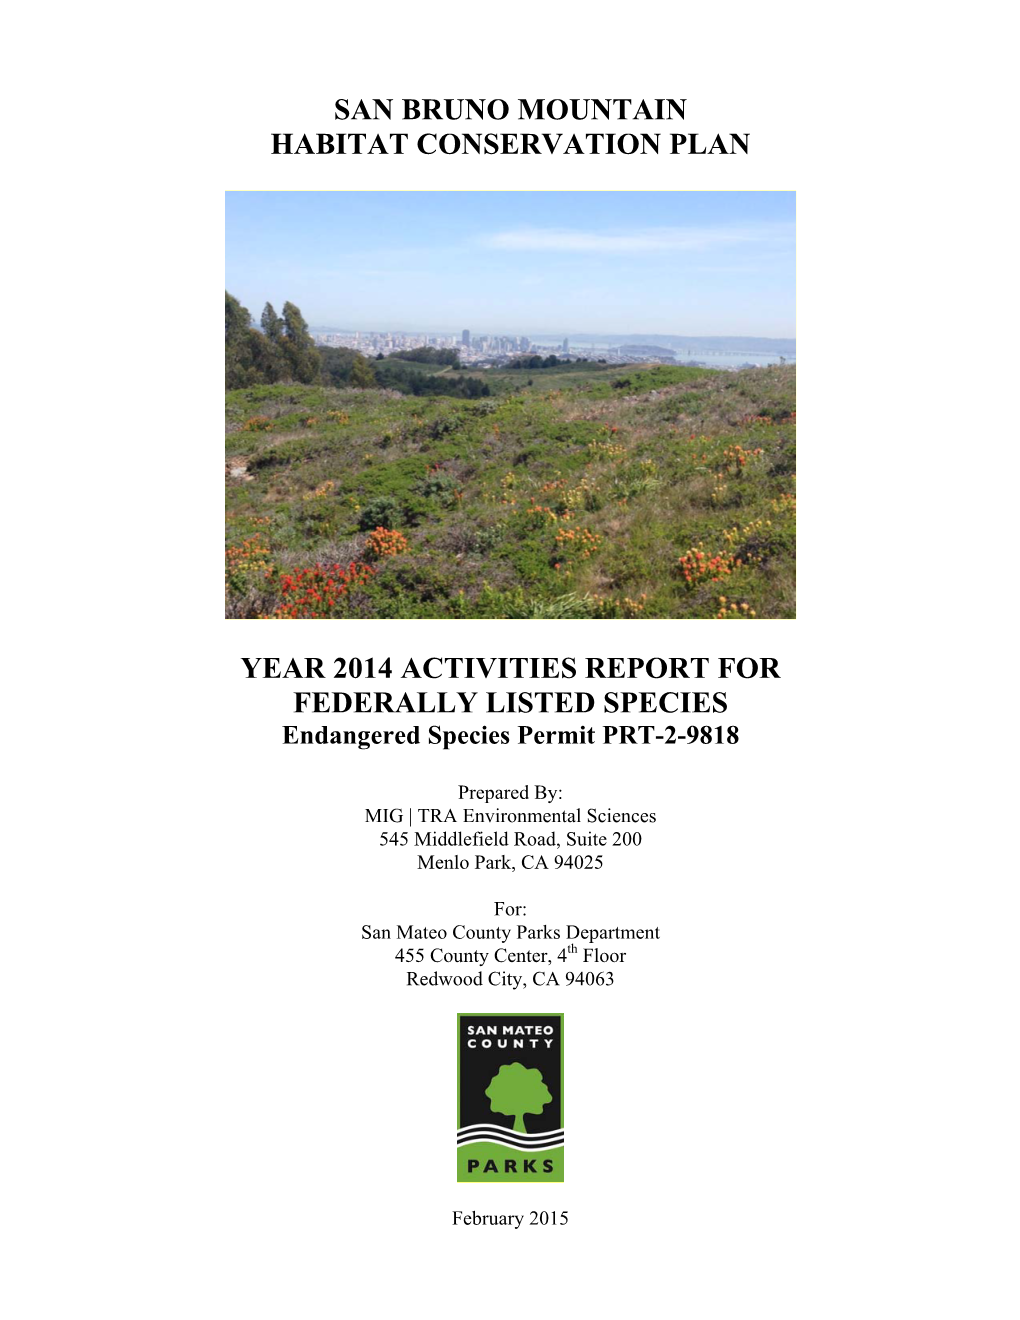 San Bruno Mountain Habitat Conservation Plan